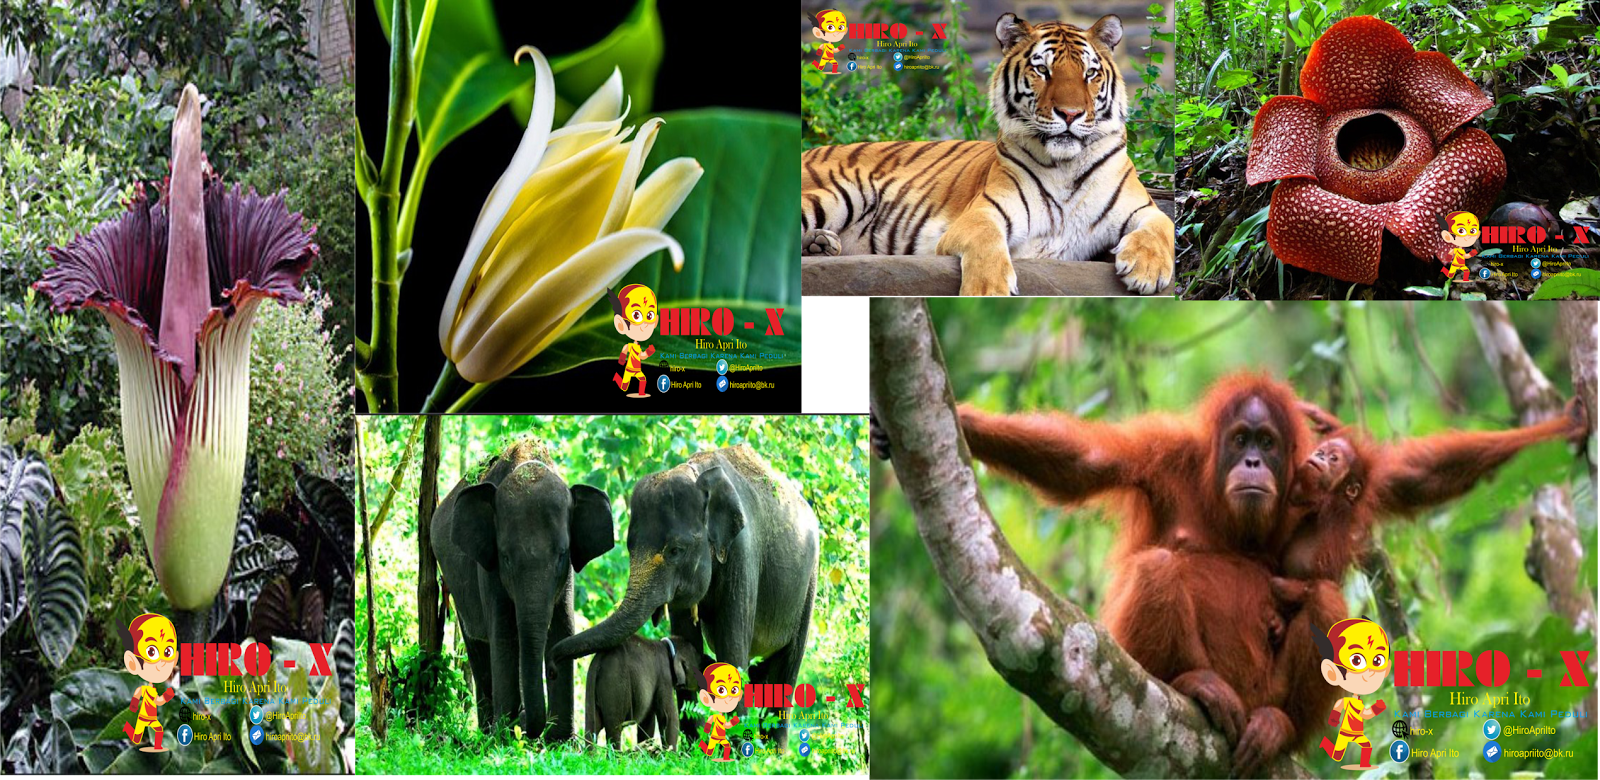 Gambar Fauna  Di  Indonesia  Beserta  Namanya